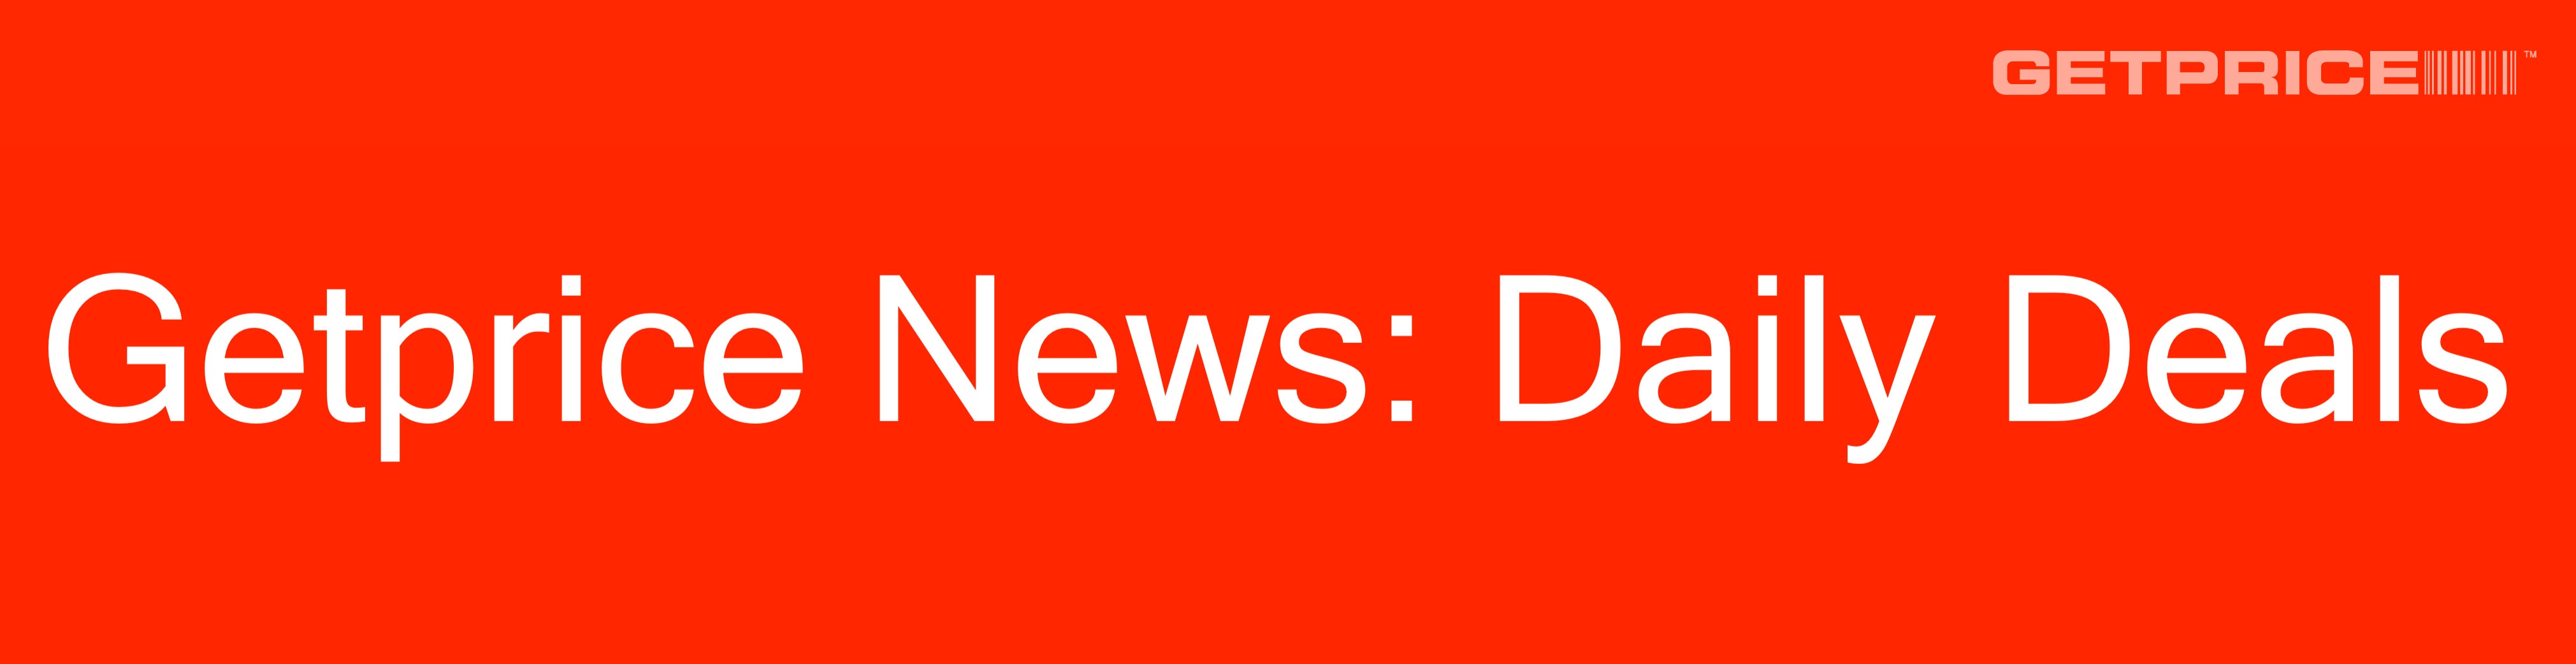 Getprice News: Daily Deals